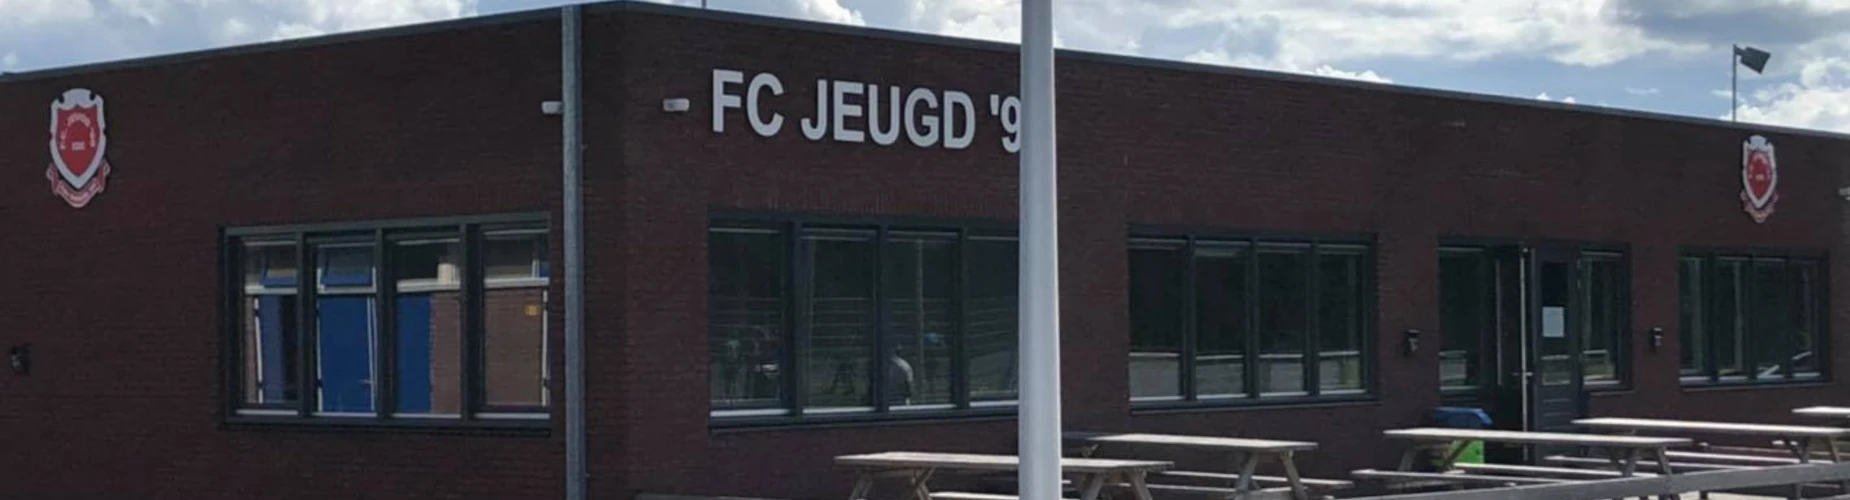 Banner - FC Jeugd Ede - Ede